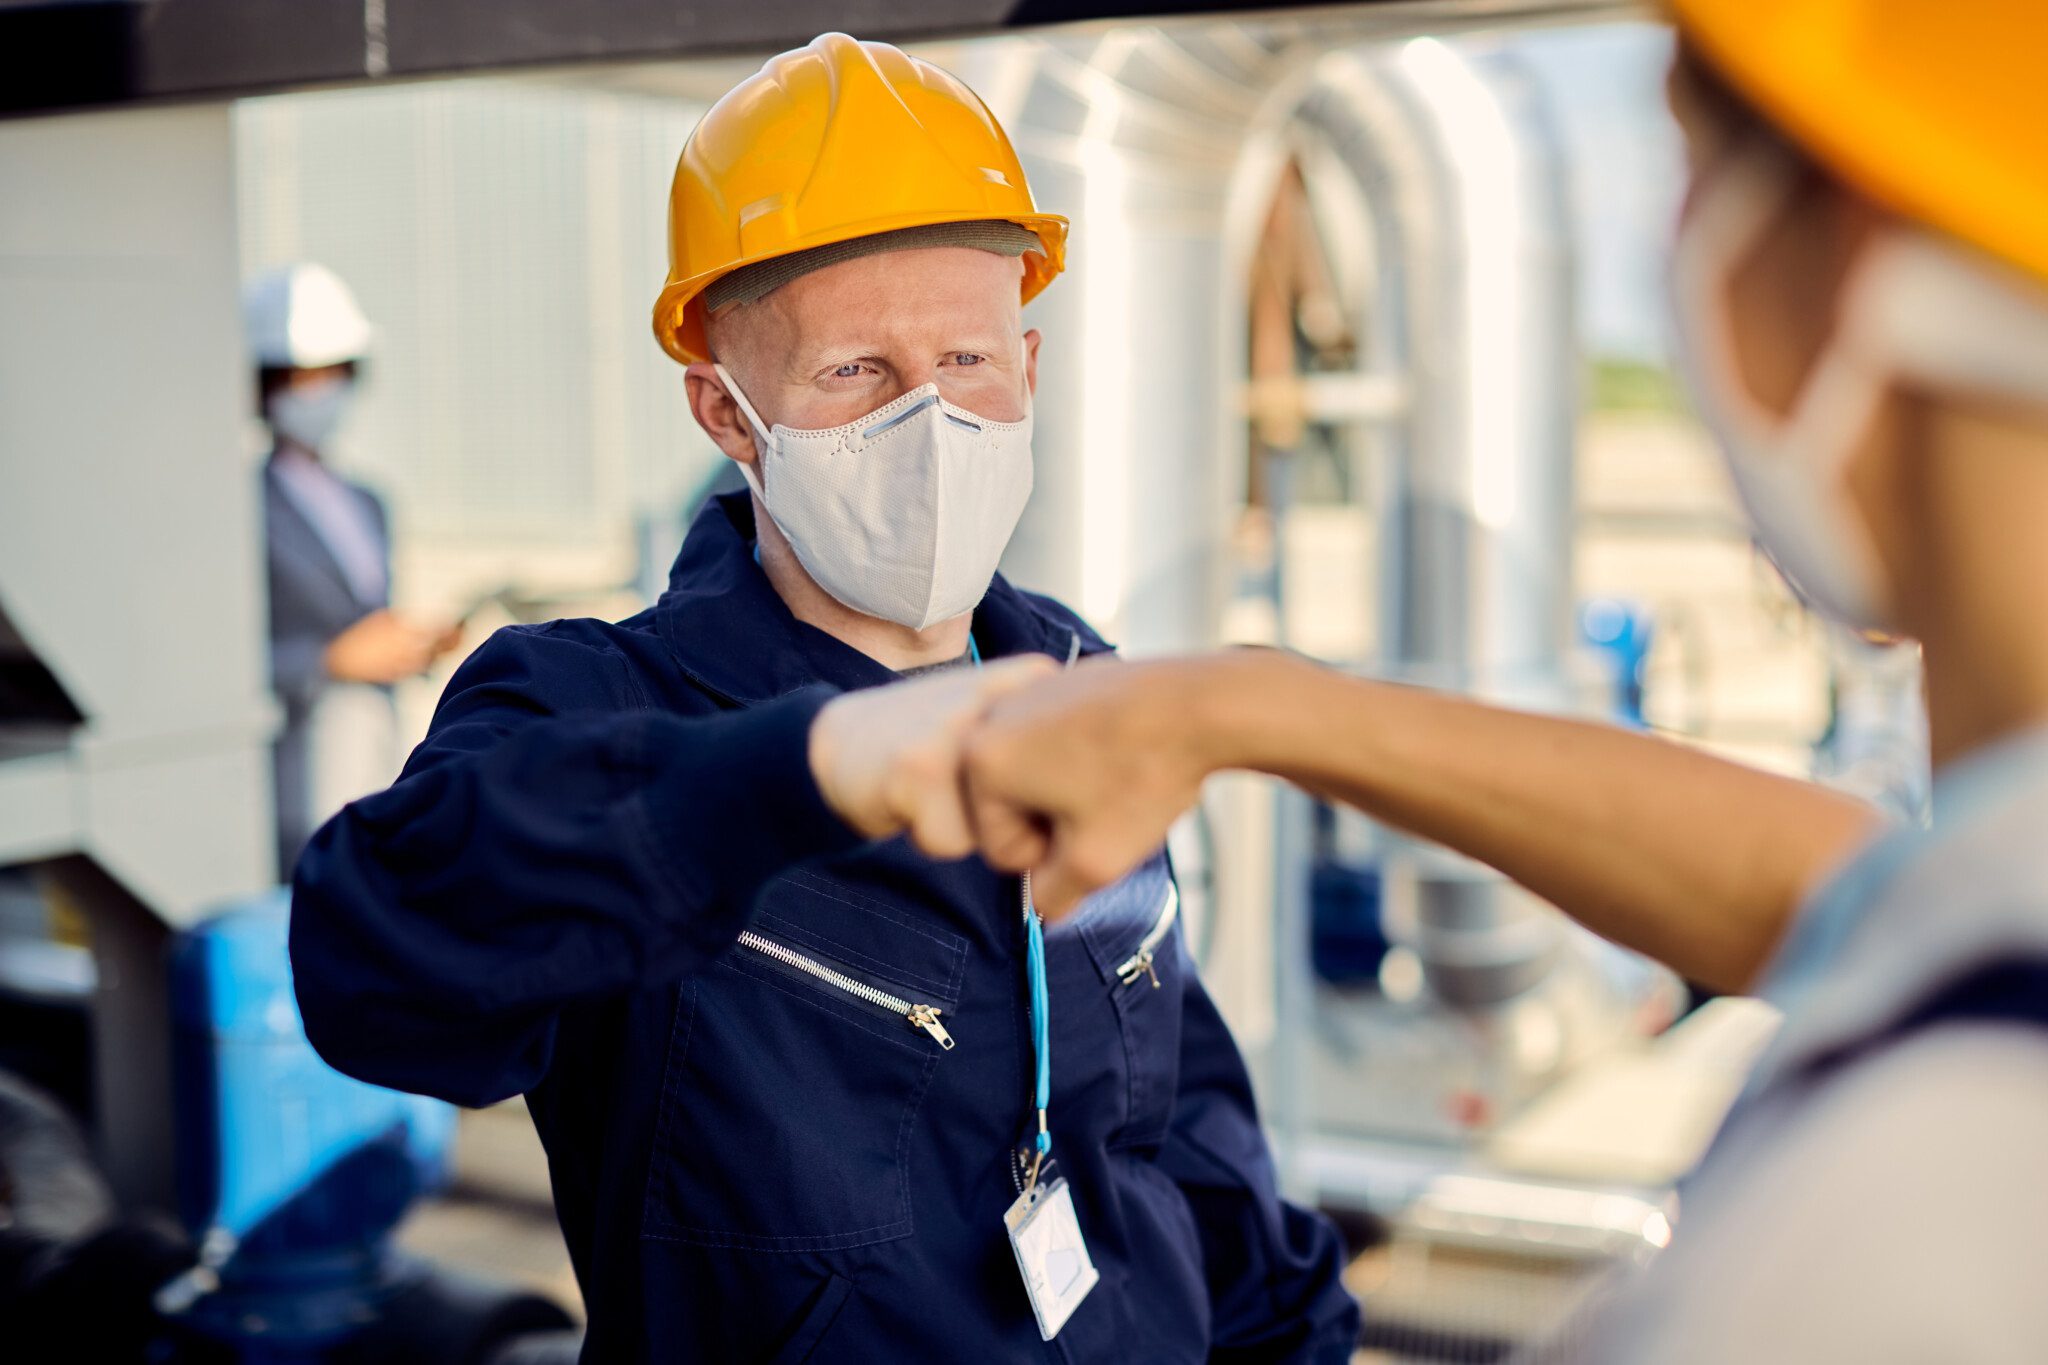 Construction workers fist bumping during coronavirus epidemic.